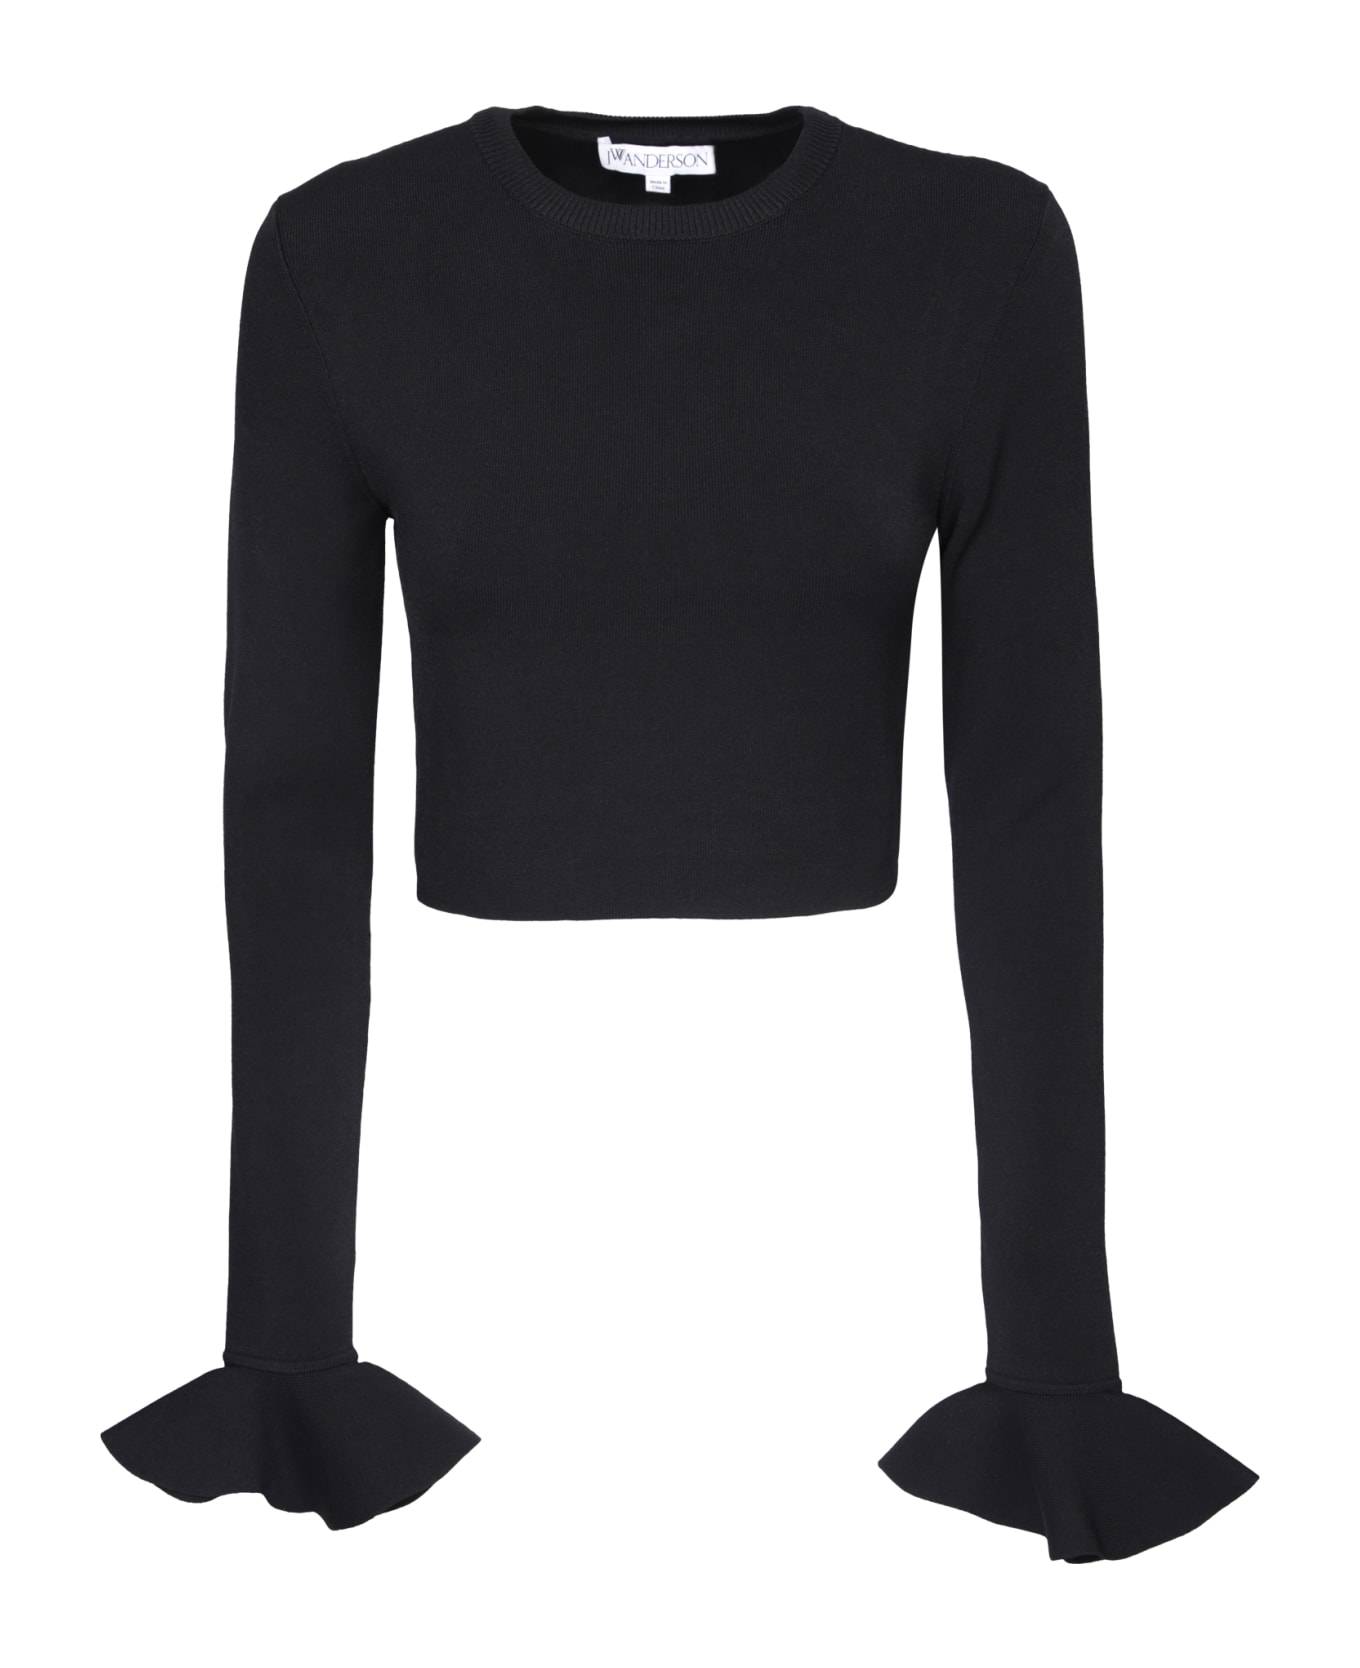 J.W. Anderson Ruffle Black Sweater - Black